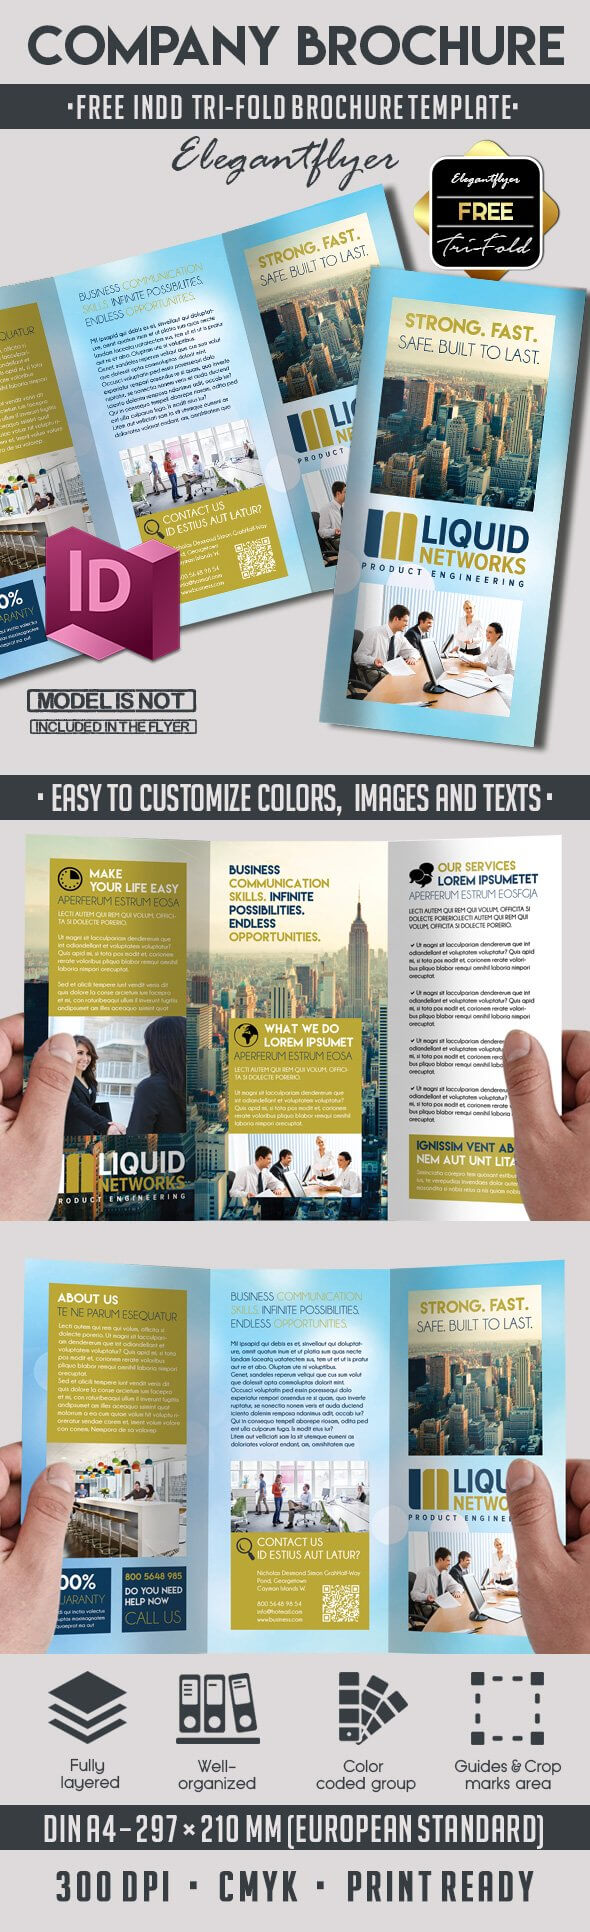 5 Powerful Free Adobe Indesign Brochures Templates! | Intended For Adobe Indesign Brochure Templates